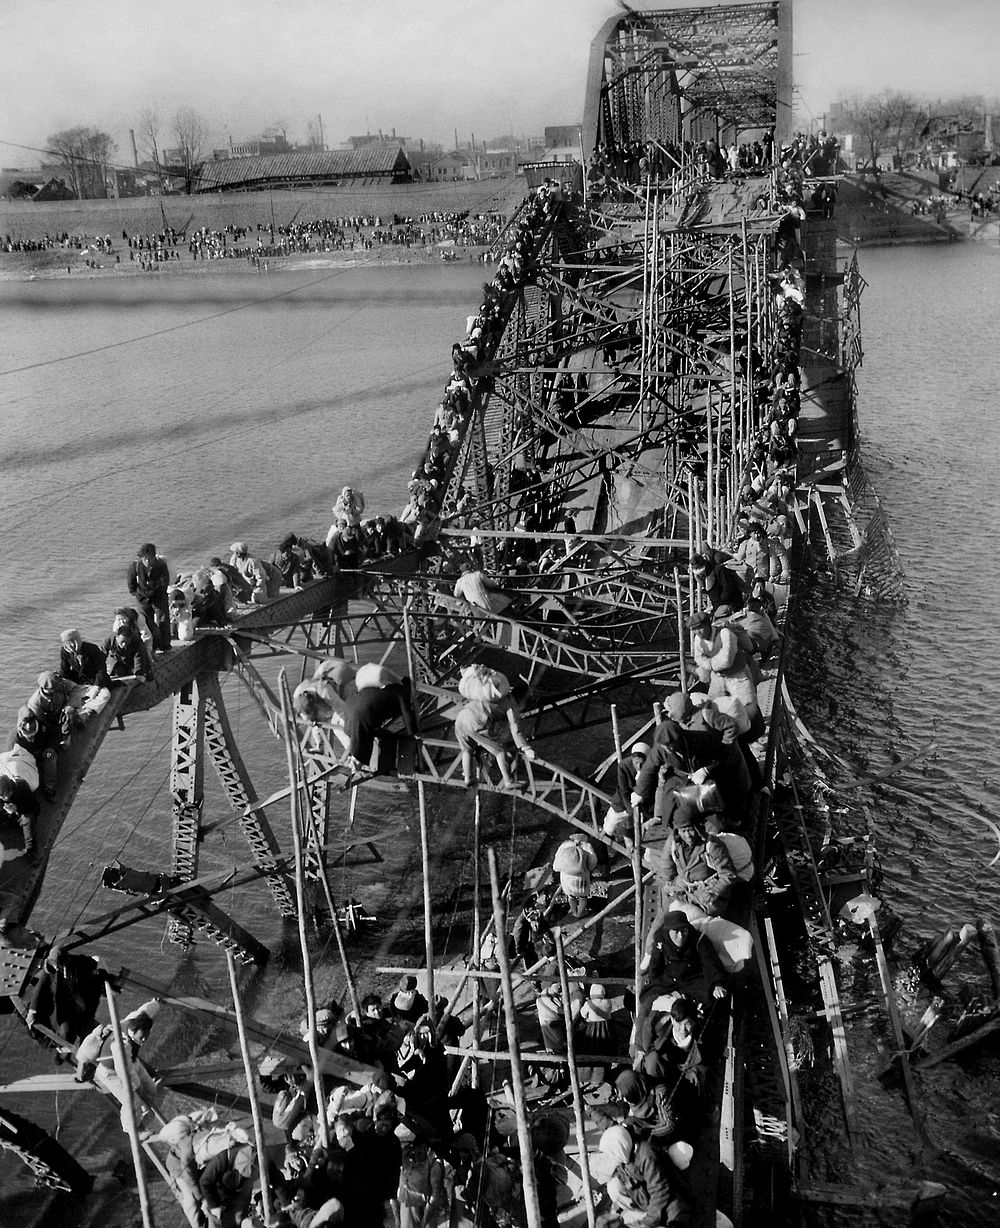 "Flight of Refugees Across Wrecked Bridge in Korea", photograph of refugees fleeing Pyongyang during the Korean War across a…